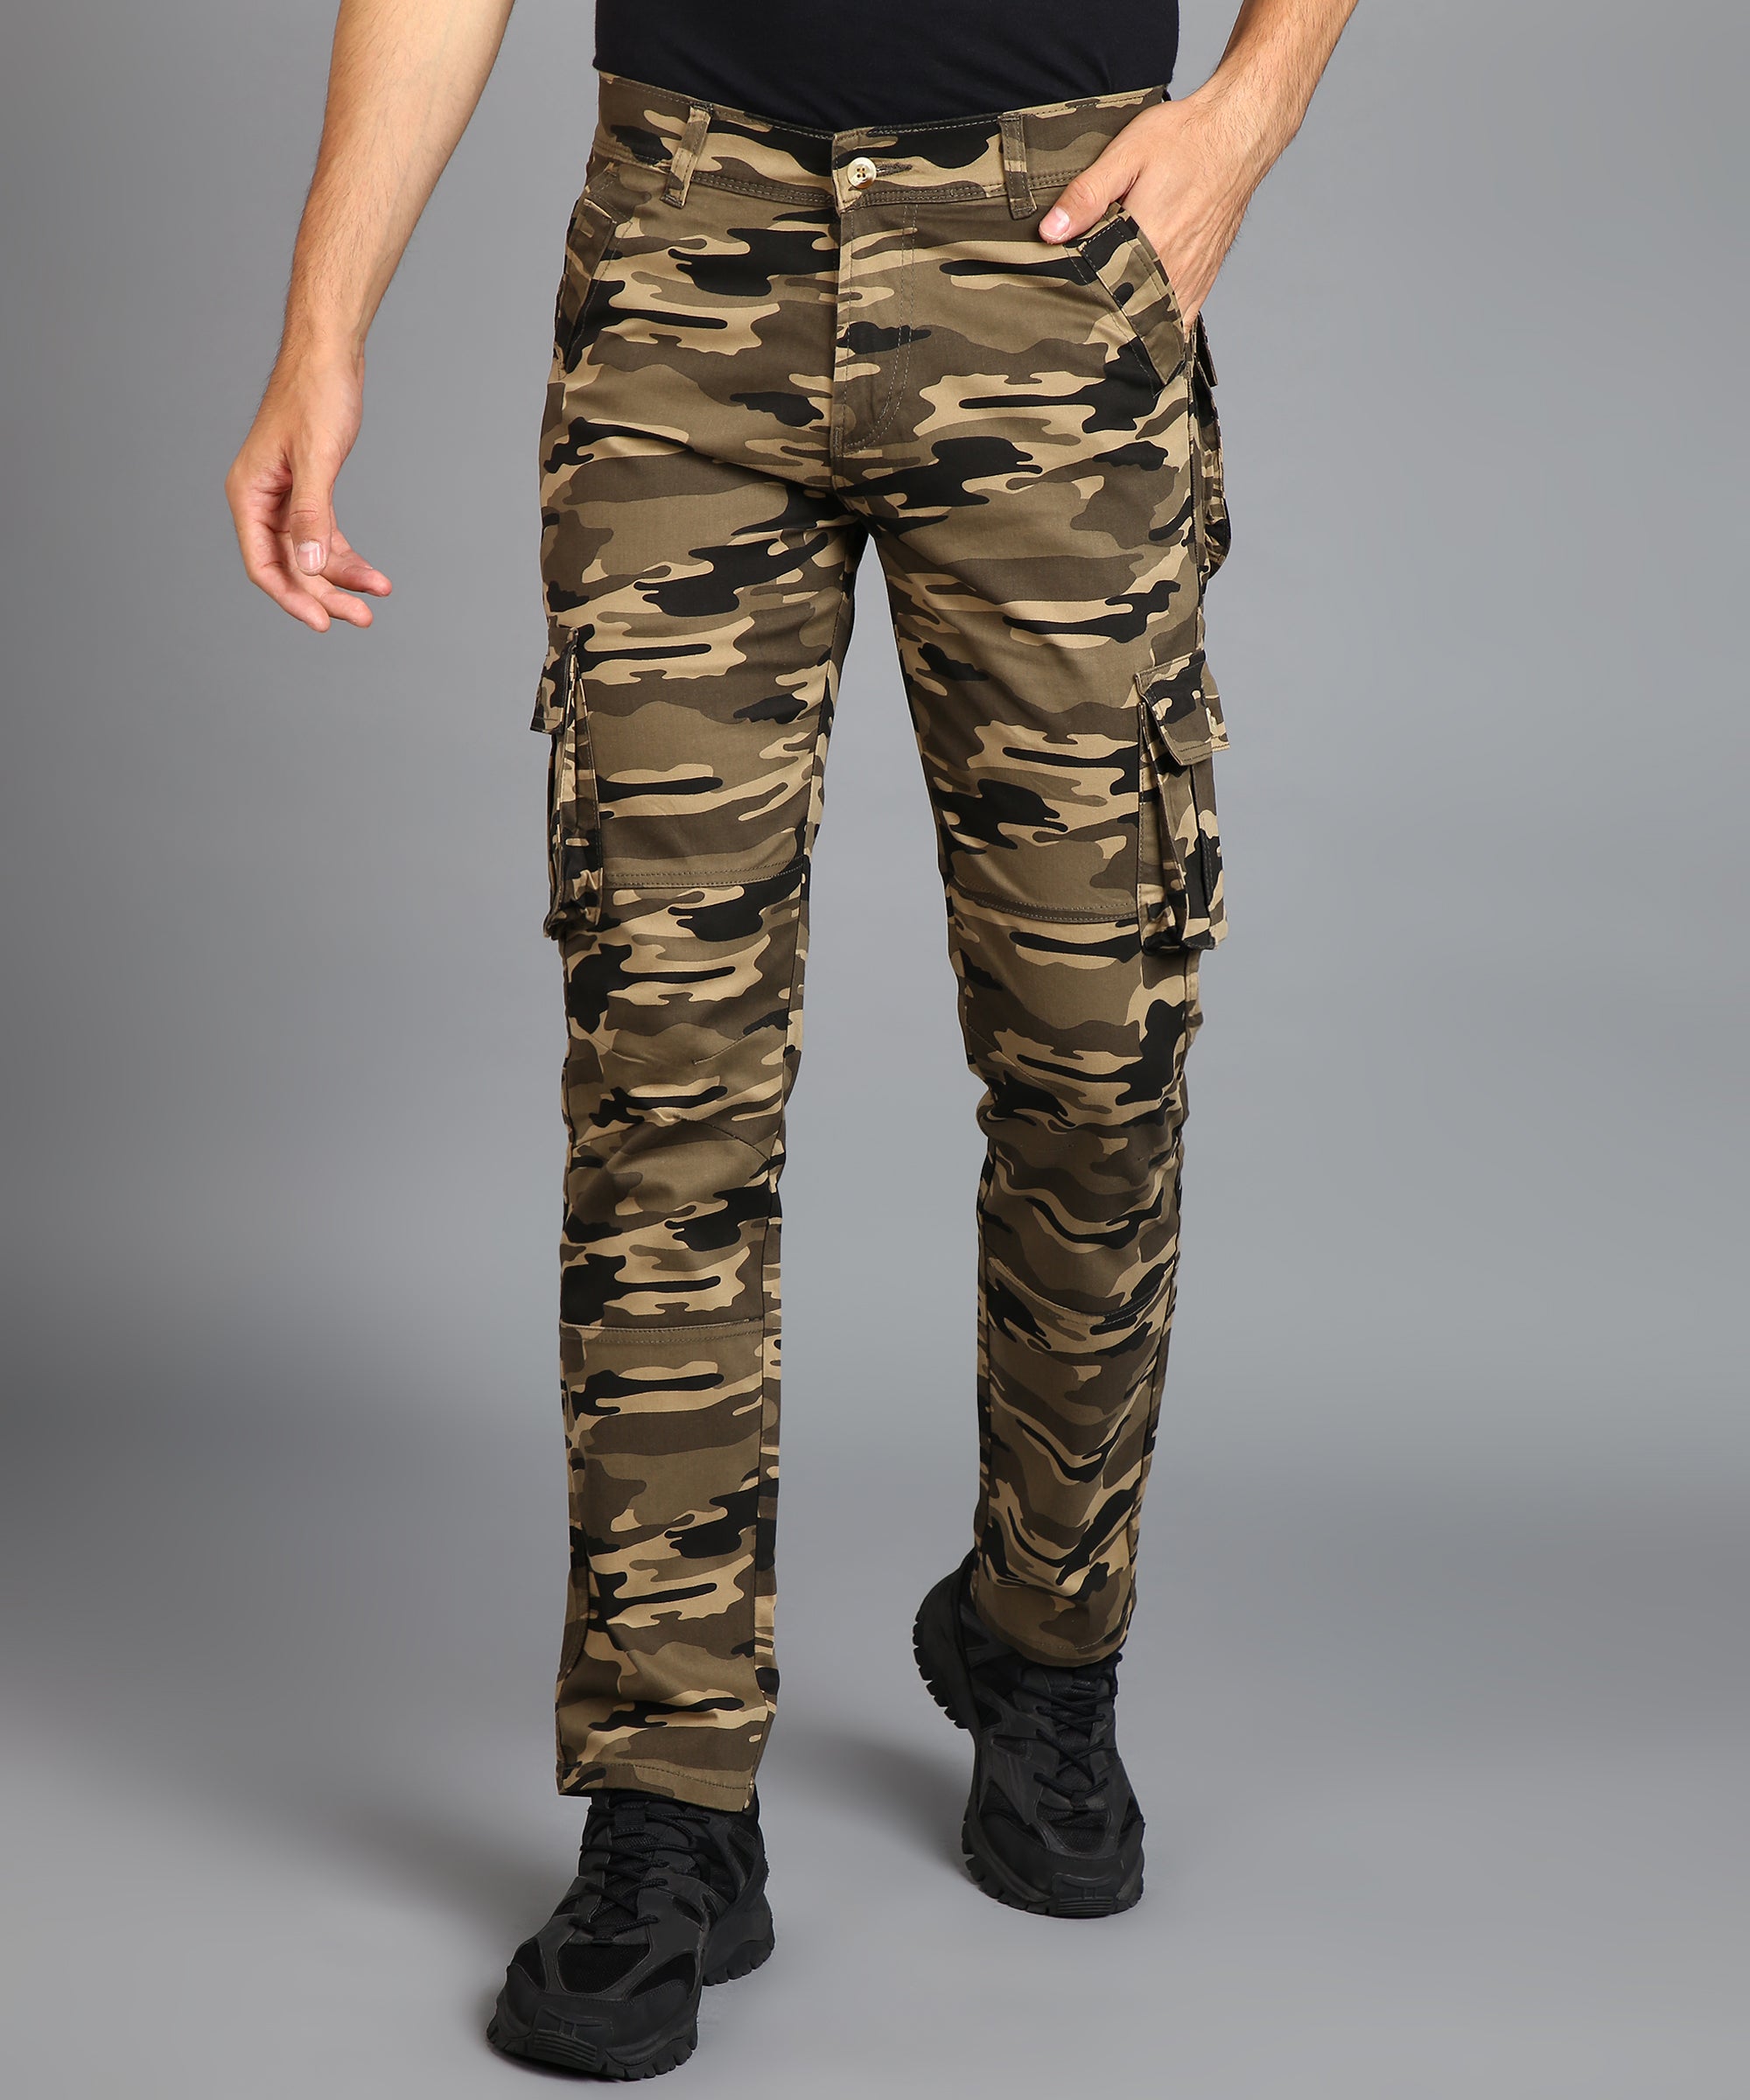 Urbano Fashion Men's Khaki Regular Fit Military Camouflage Cargo Chino Pant with 6 Pockets